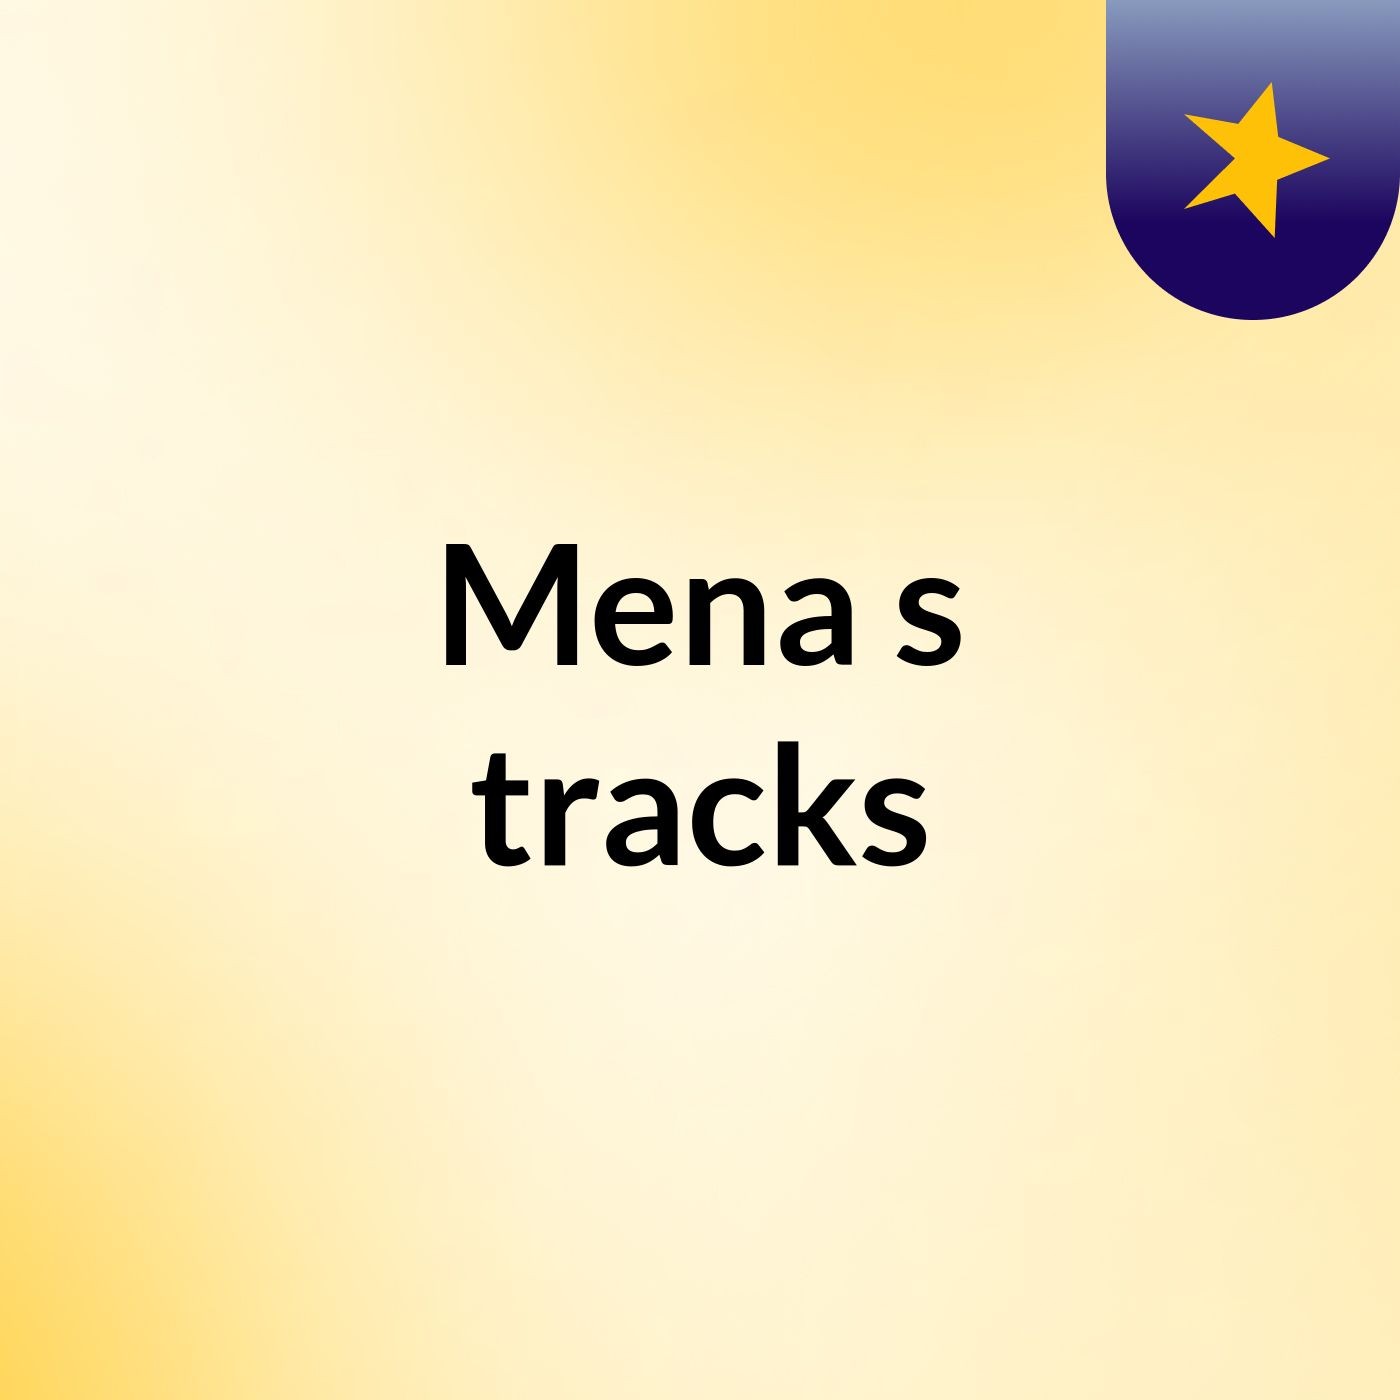 Mena's tracks